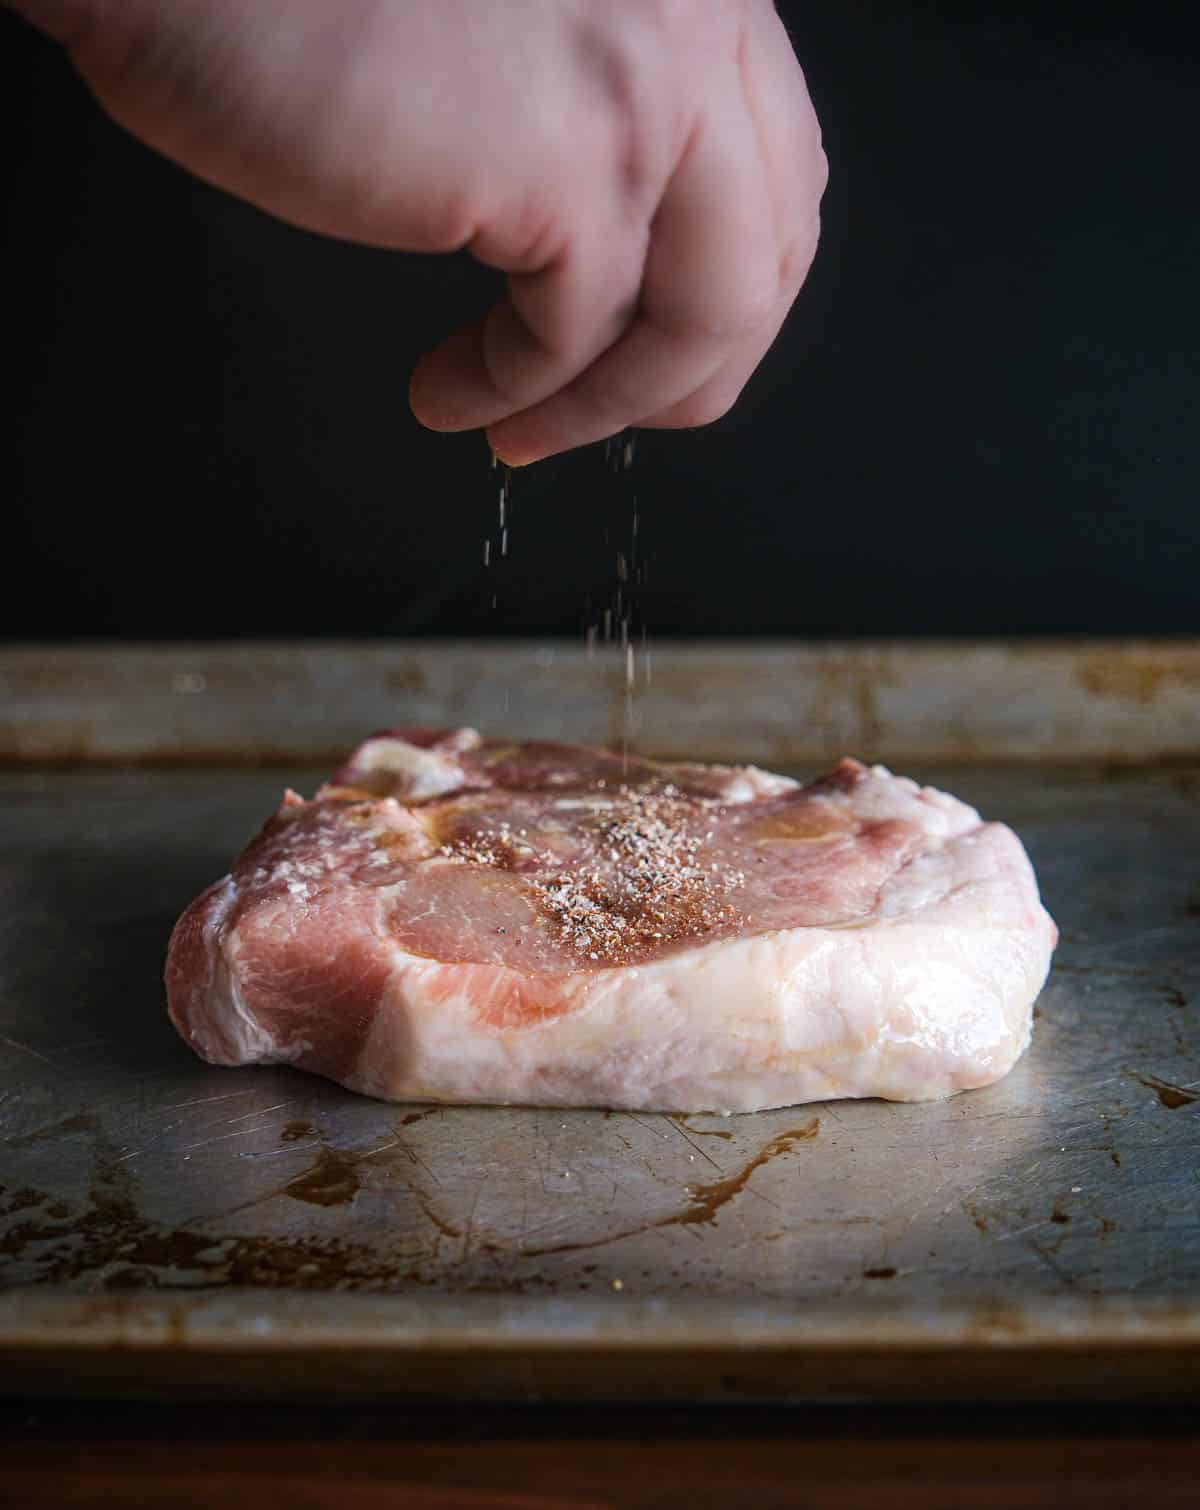 Seasoning a raw pork steak